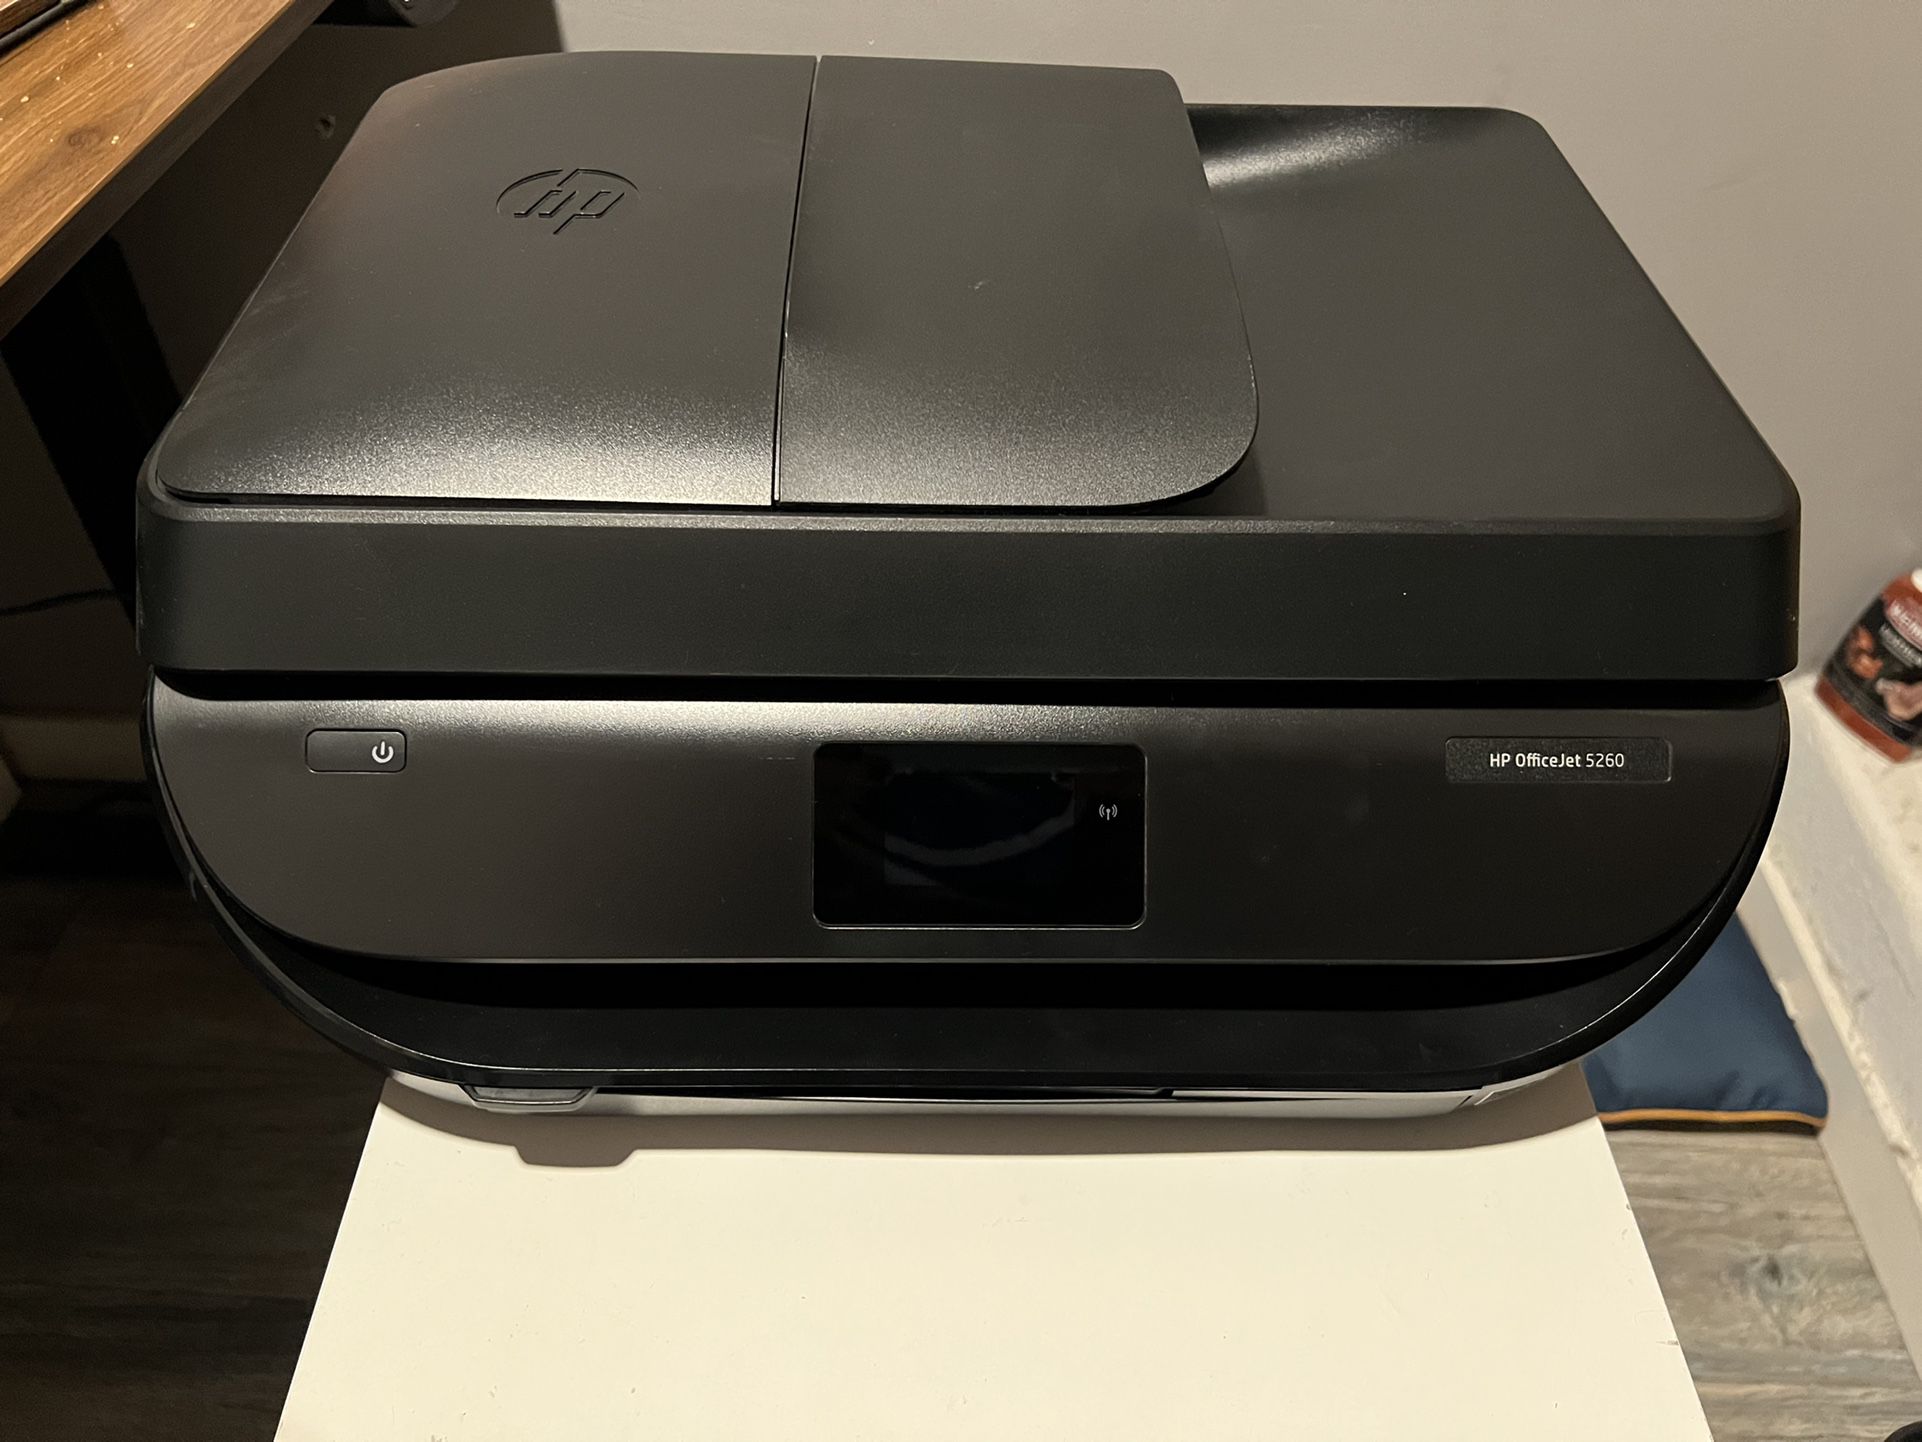 LIKE NEW HP Office Jet 5260 Printer 